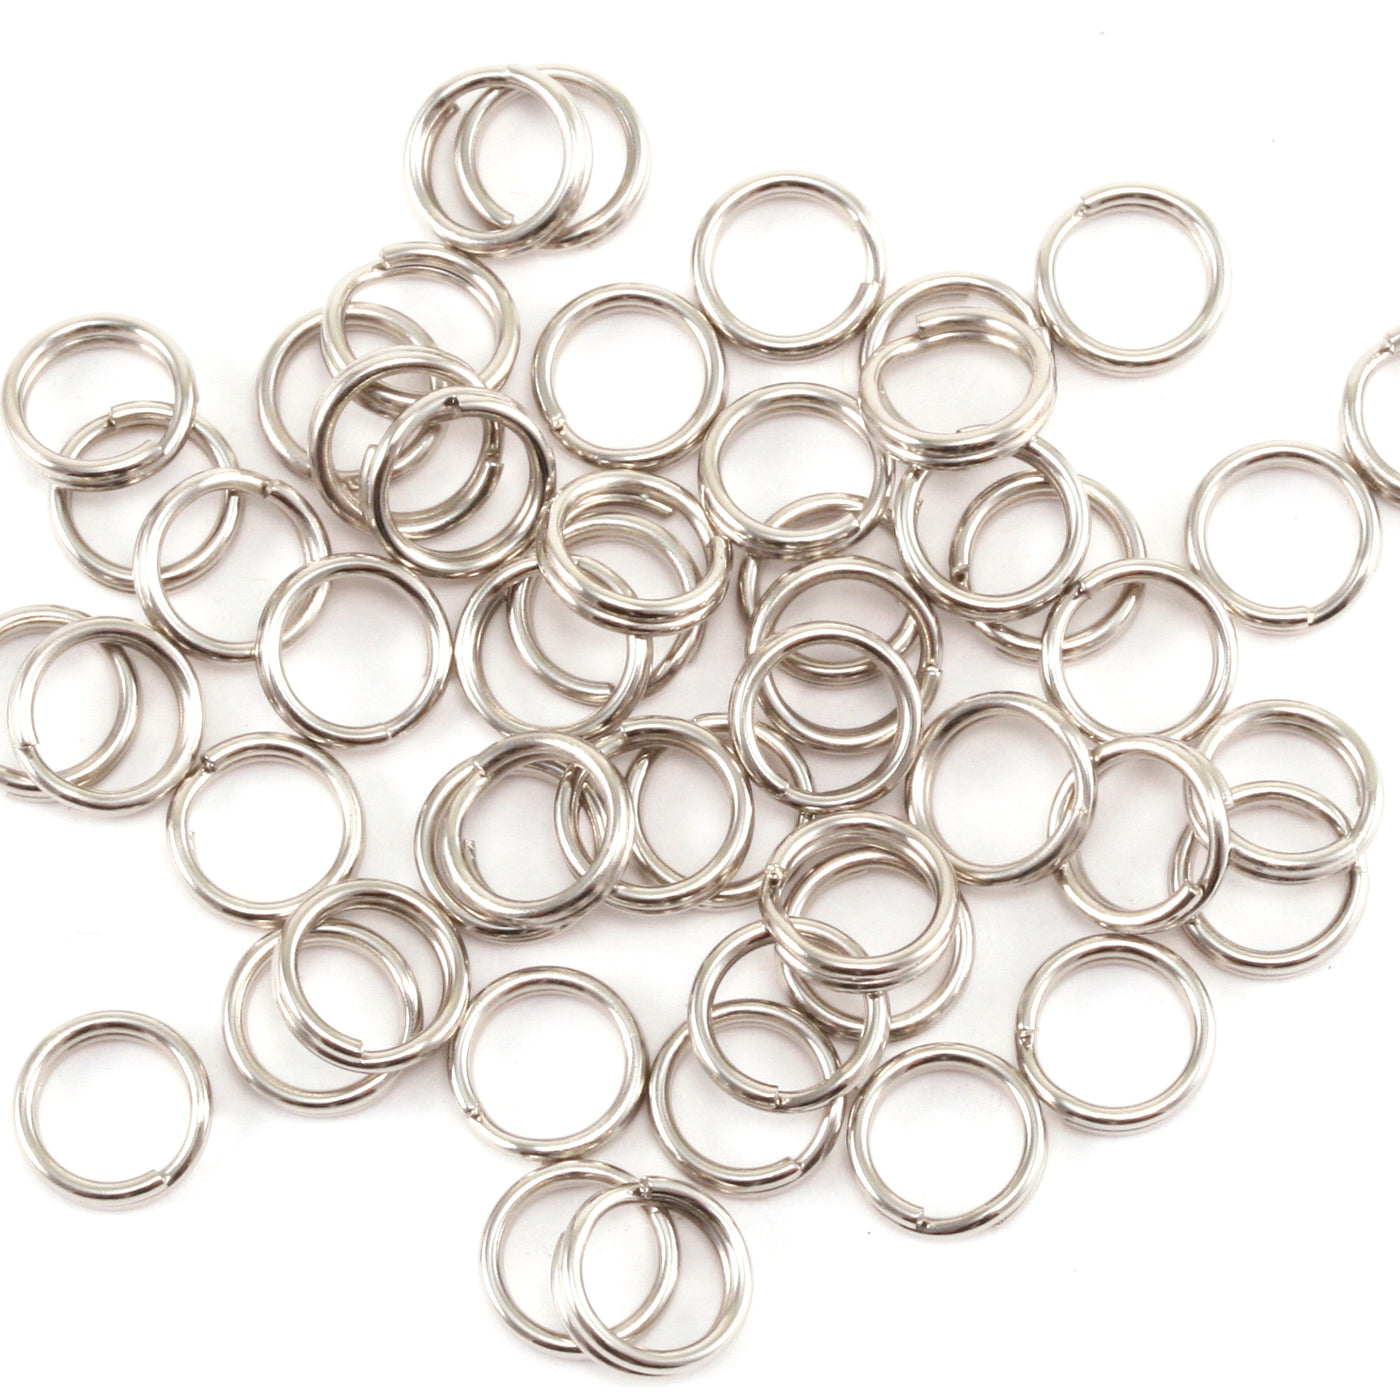 Nickel Silver 4.25mm I.D. Split Rings, Pack of 50 – Beaducation